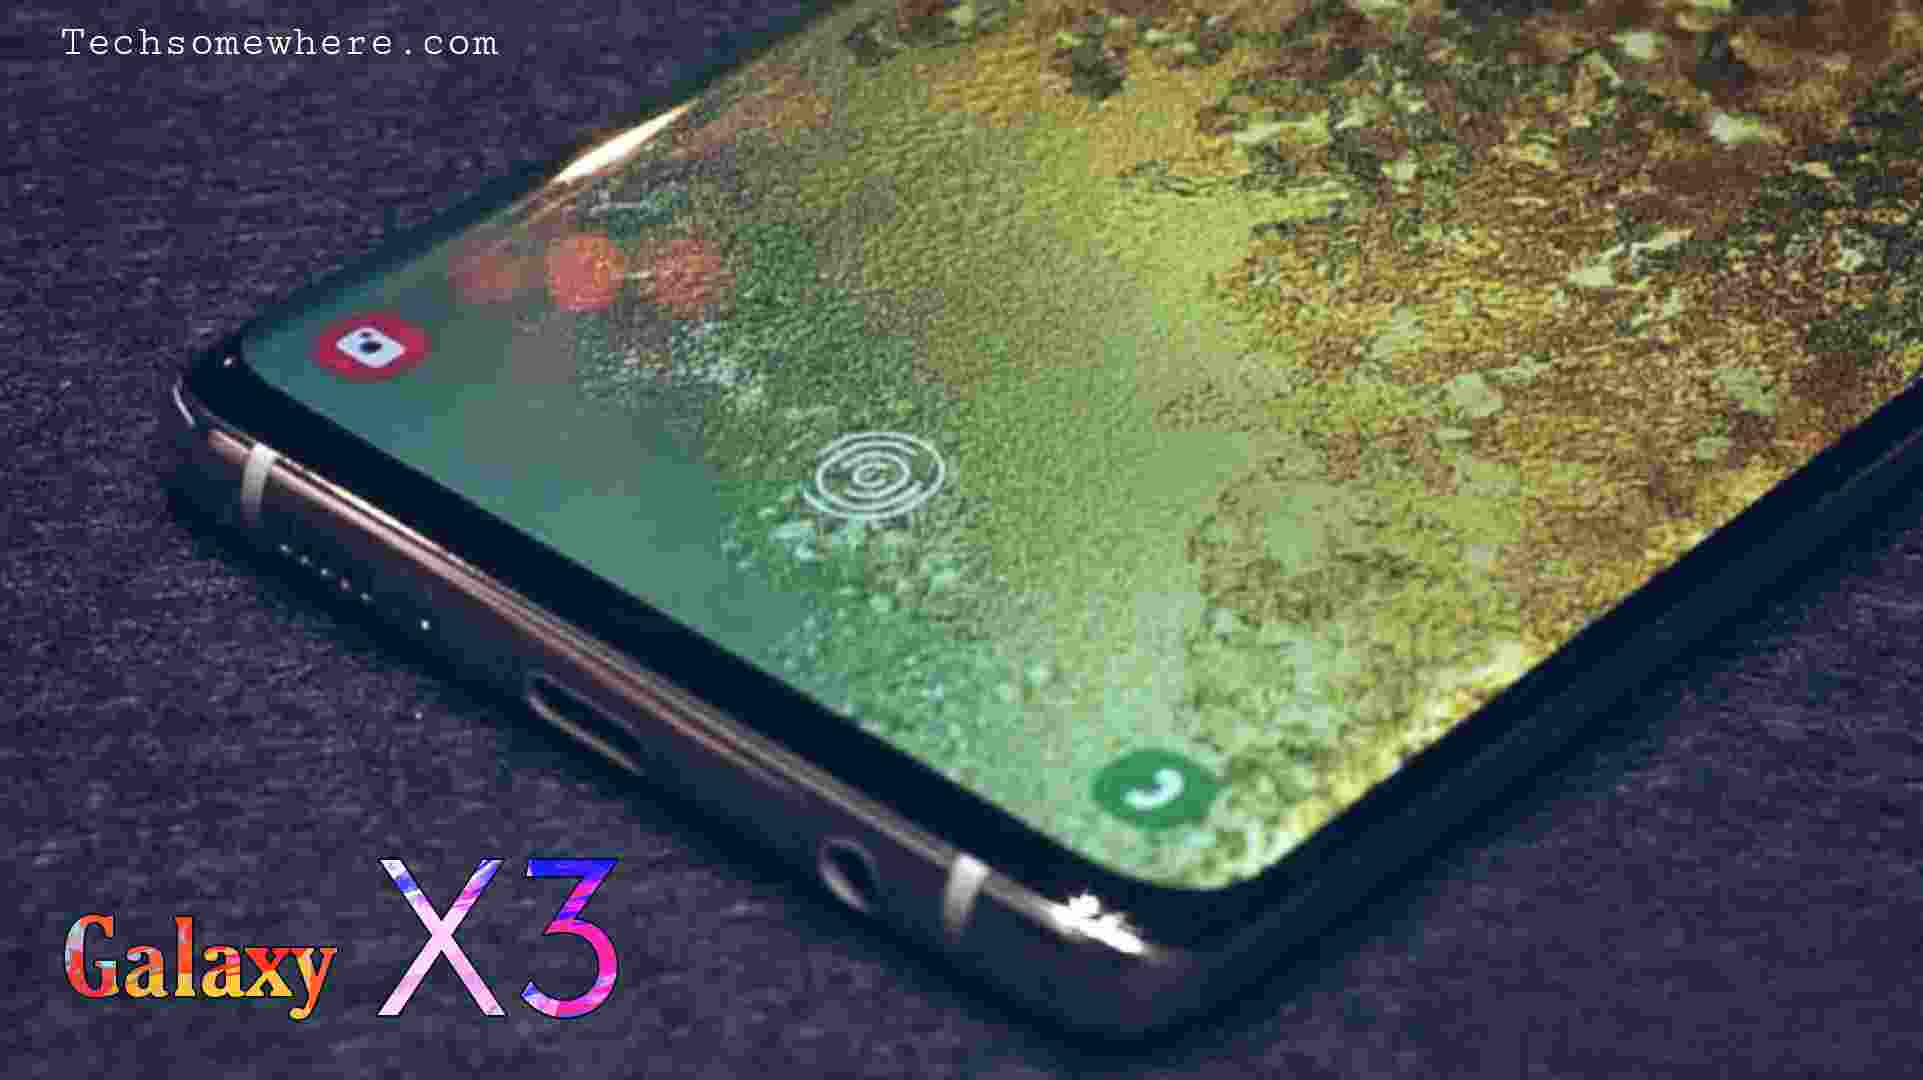 Samsung Galaxy X3 5G - Price, Full Specs & Release Date!